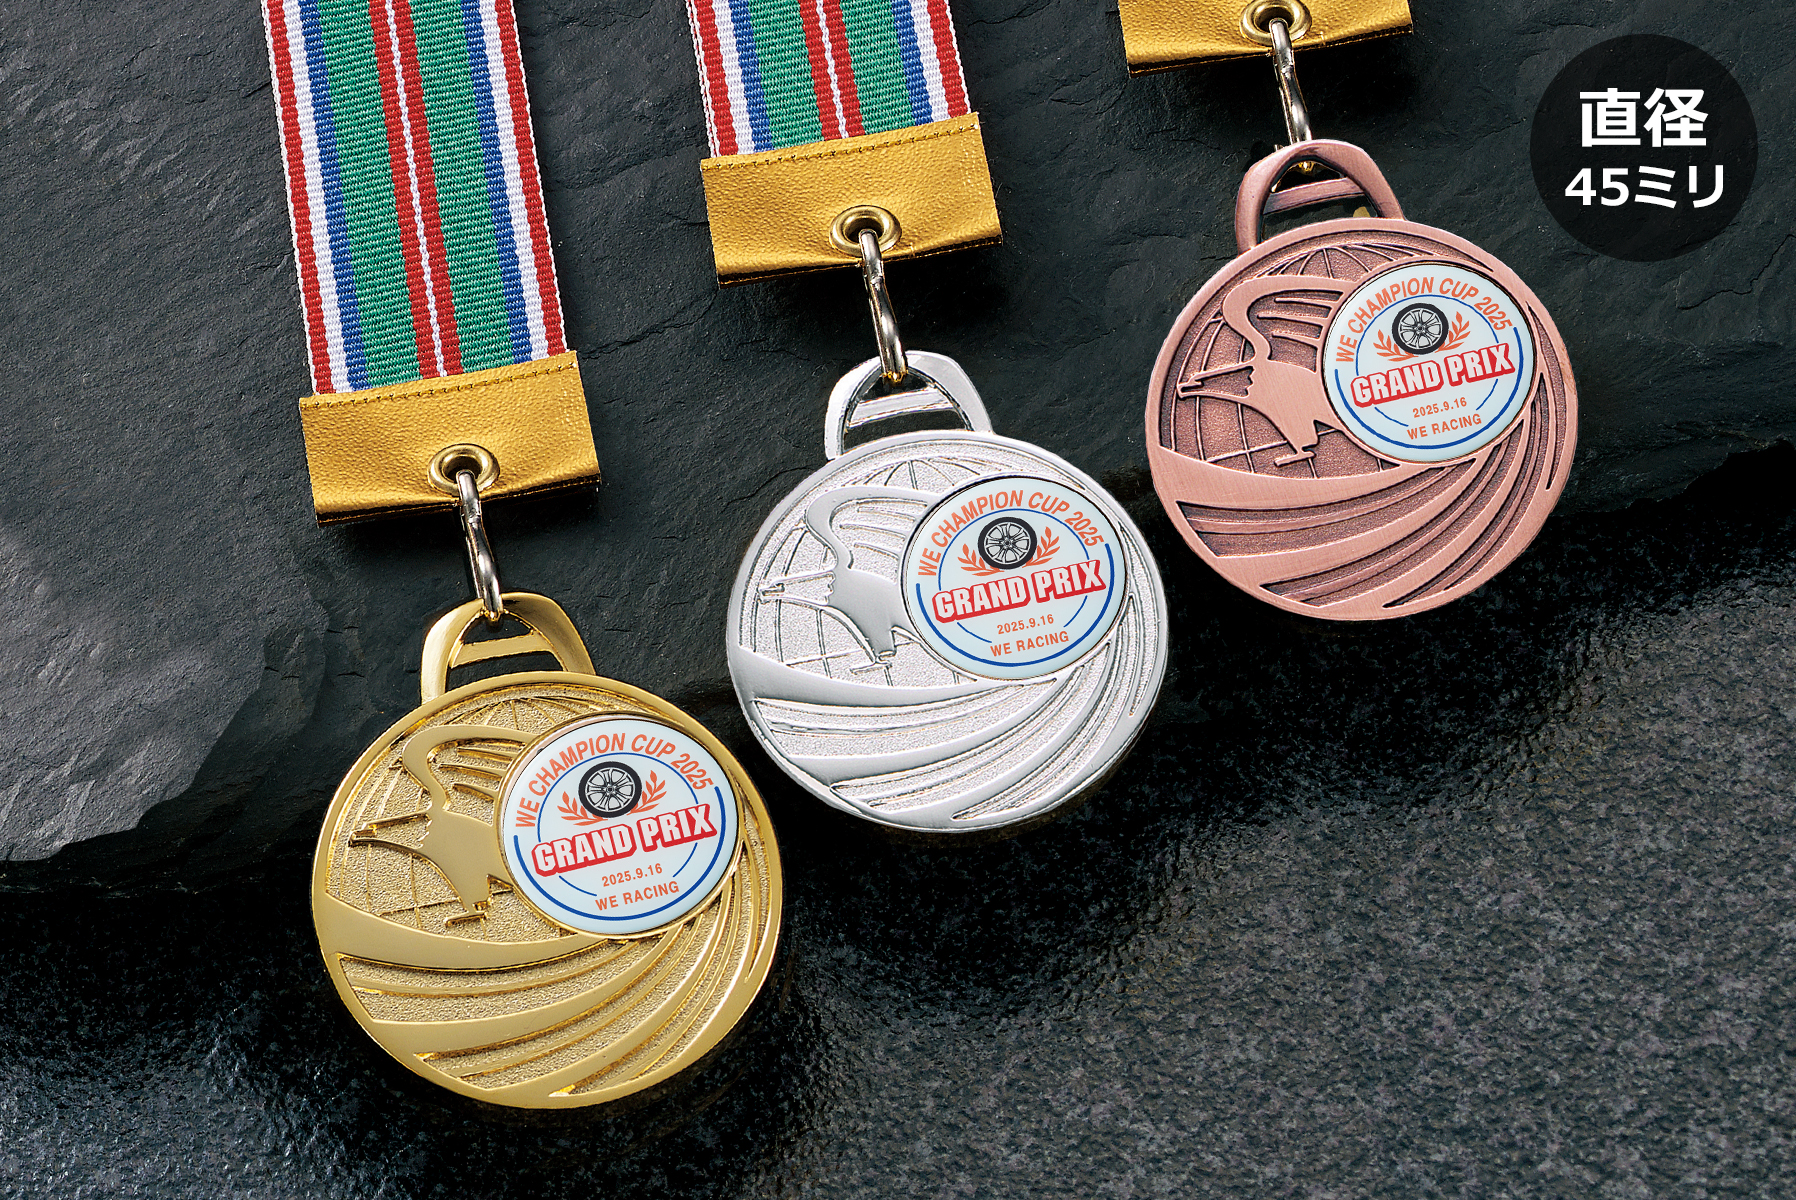 JW-SHM-165 金メダル・銀メダル・銅メダルから選択可能なオリジナルエンブレムをデザインが出来るセミオーダーメダル